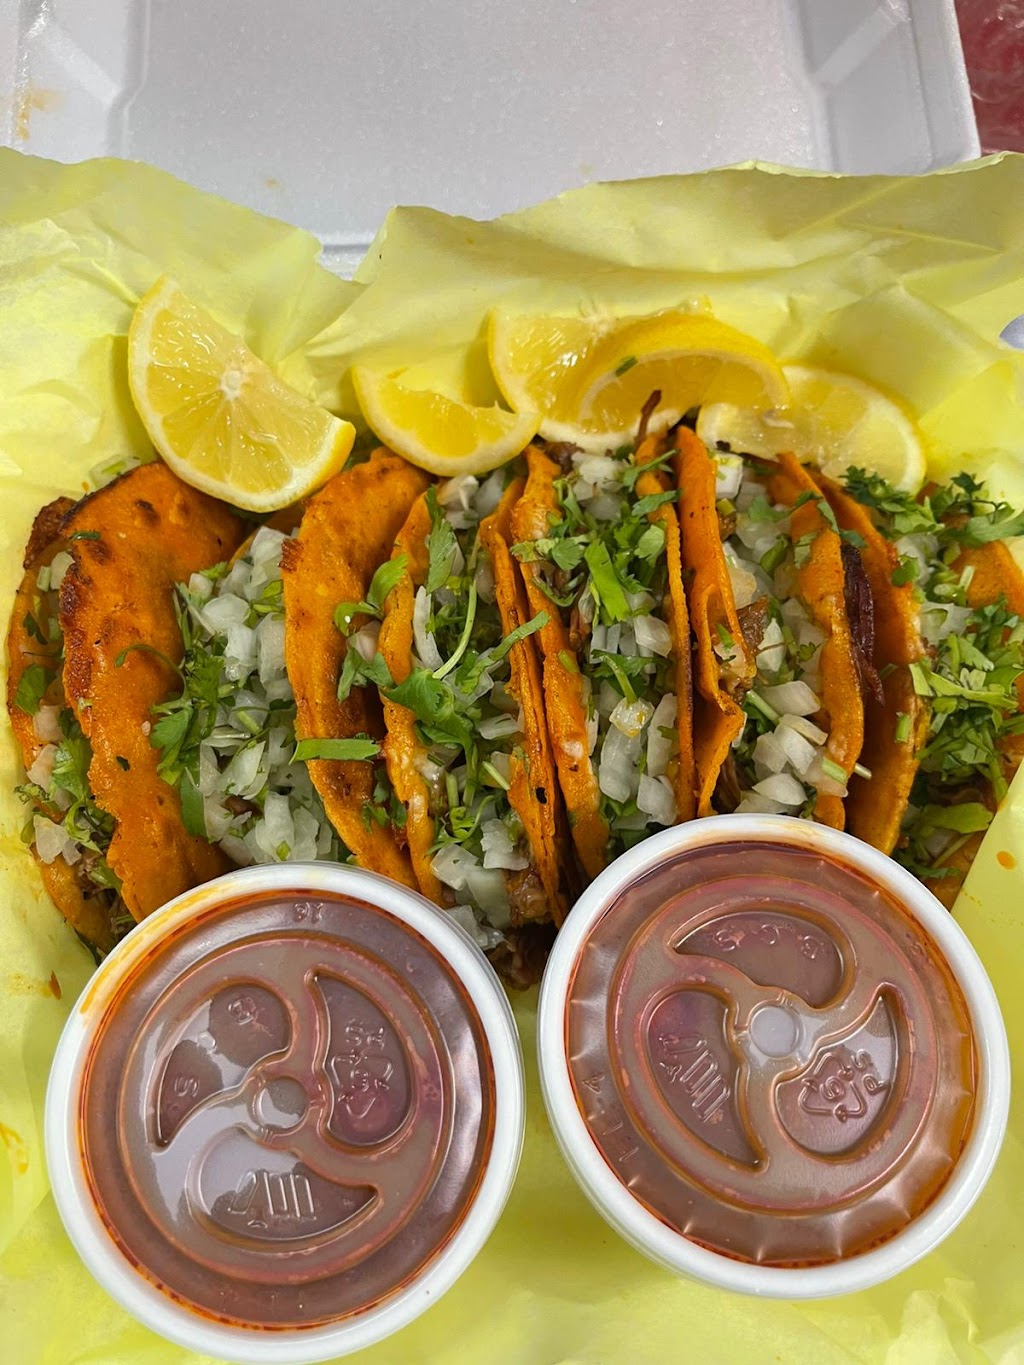 Amor A La Mexicana Restaurant | 8806 N 43rd Ave, Glendale, AZ 85302 | Phone: (623) 248-4859